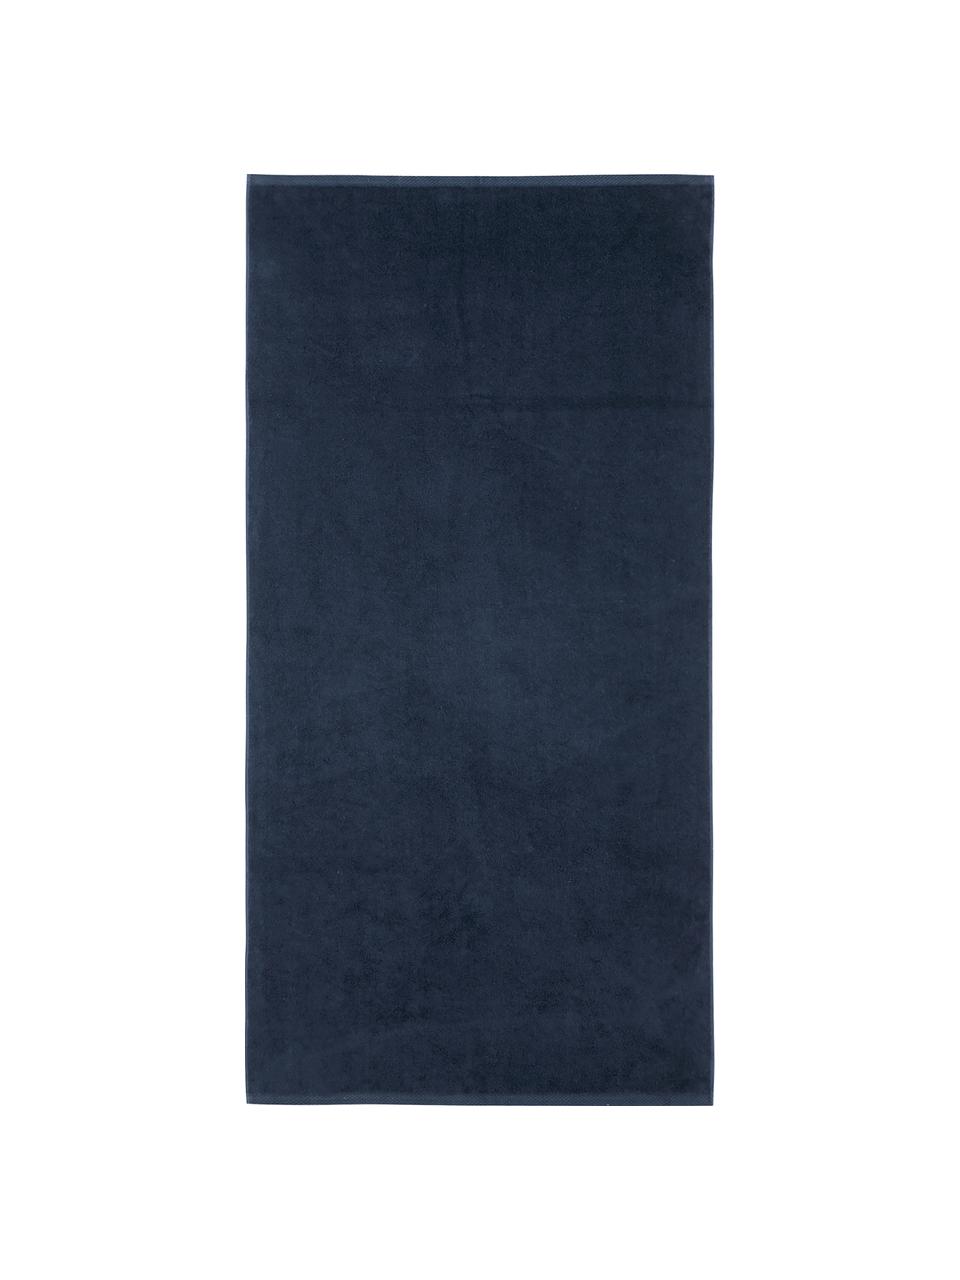 Set de toallas Comfort, 3 uds., Azul oscuro, Set de diferentes tamaños